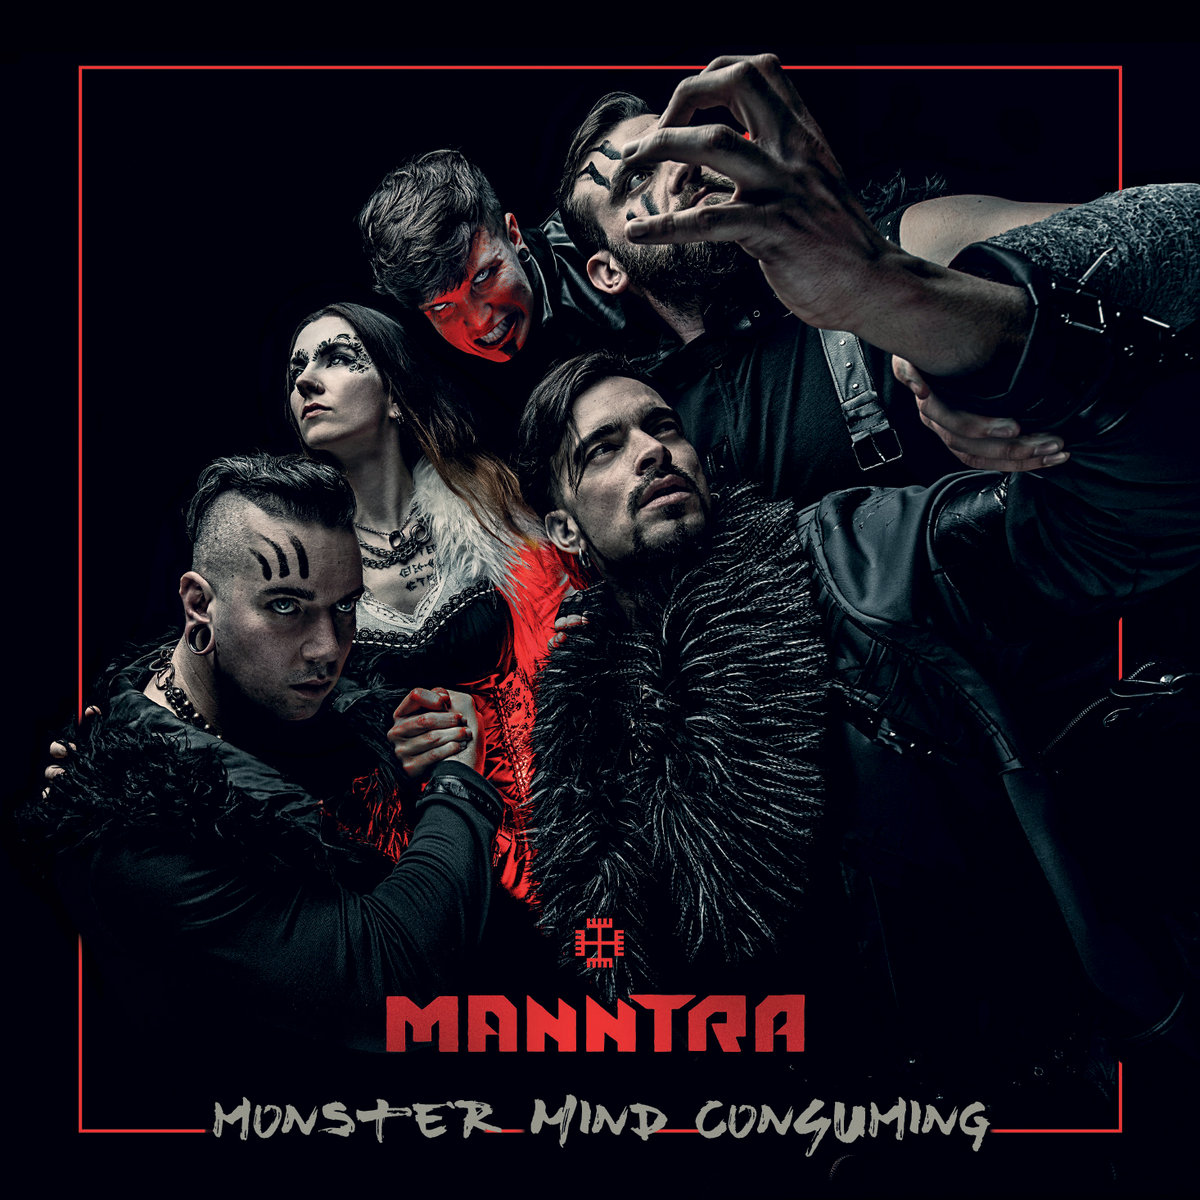 Manntra monster mind consuming stoning of soraya